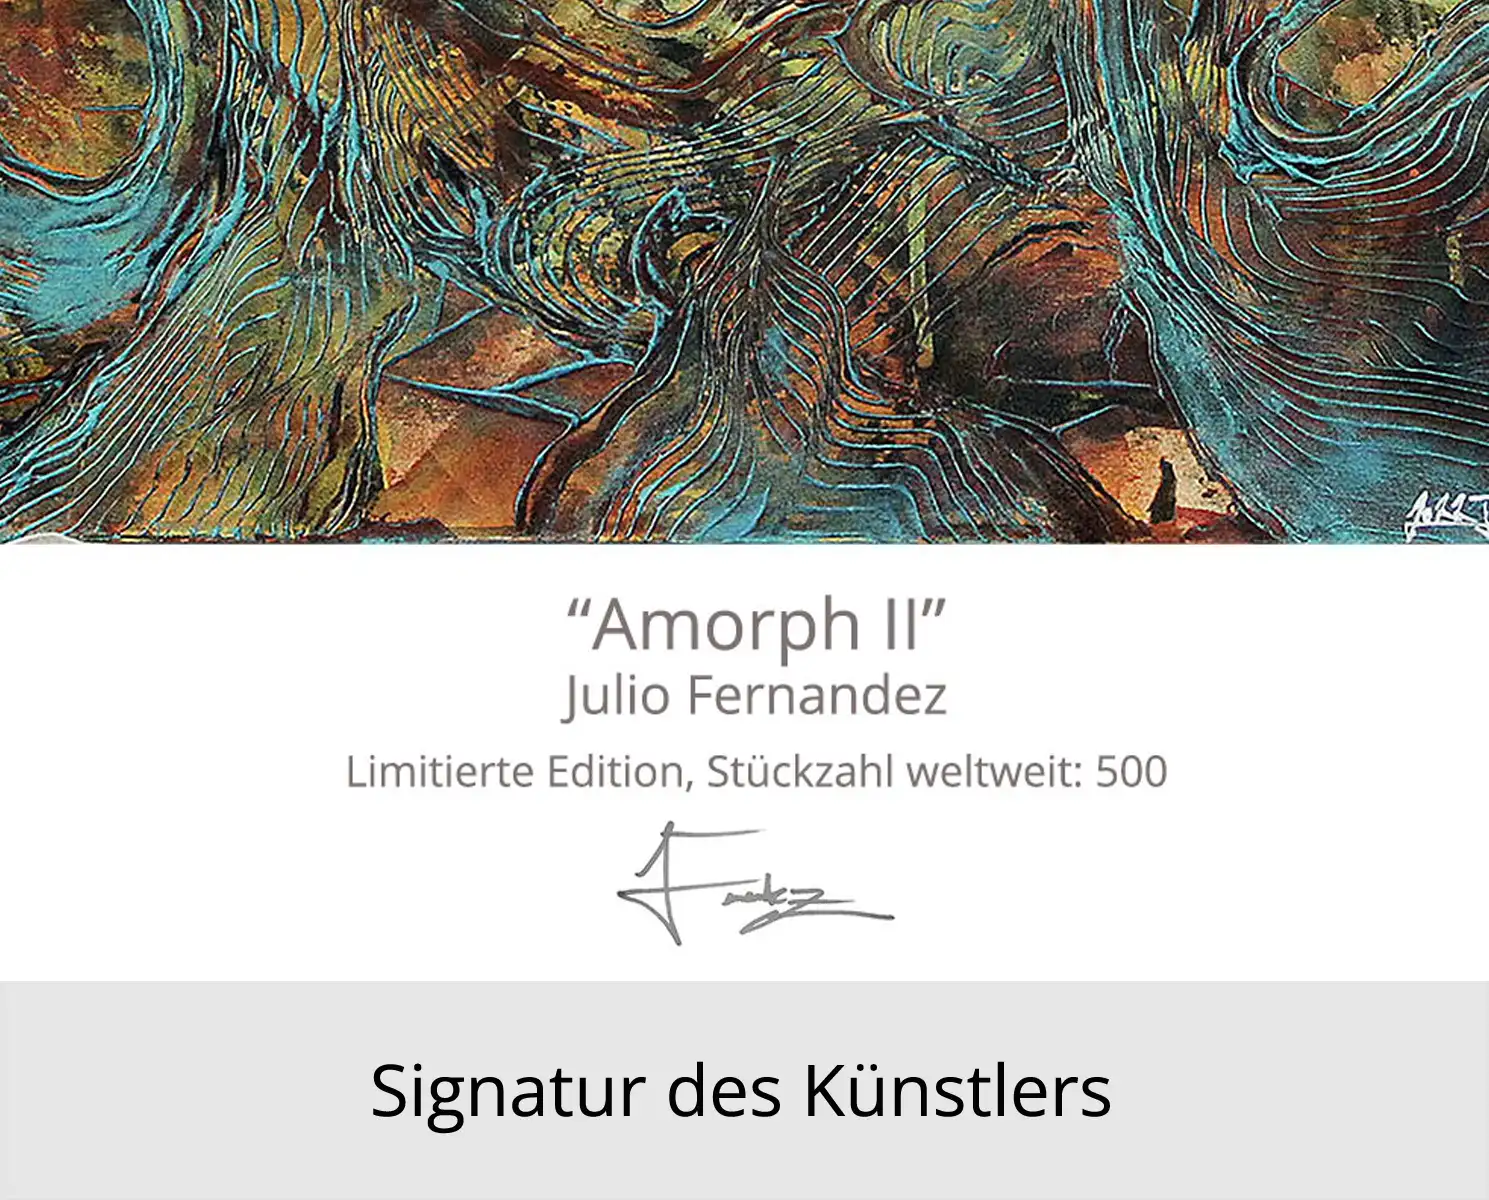 Limitierte Edition auf Papier, J. Fernandez "Amorph II", Fineartprint